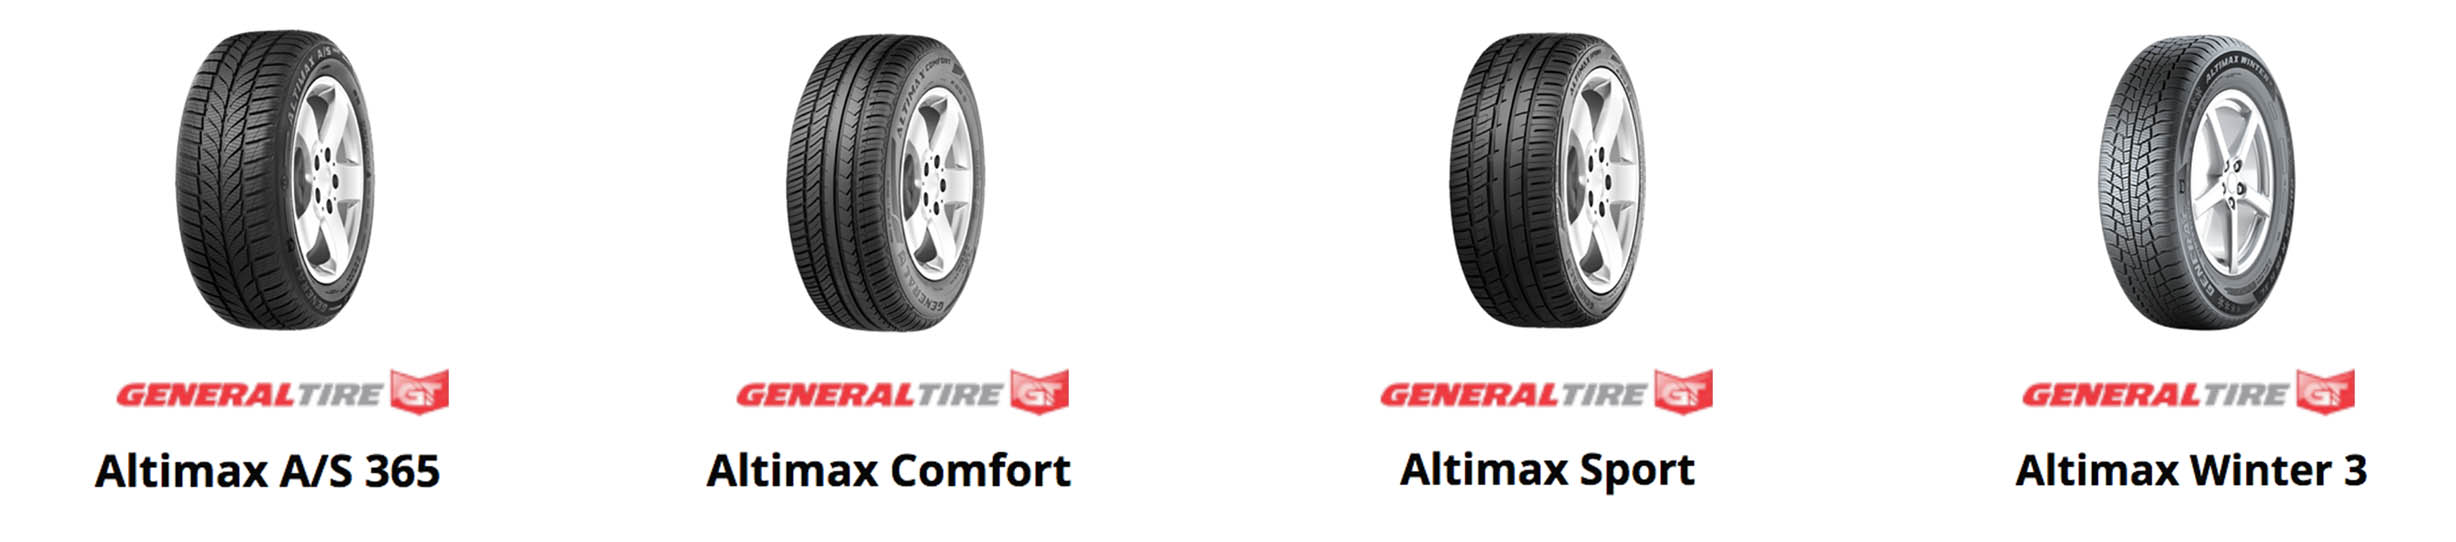 General tyres slide cardiff